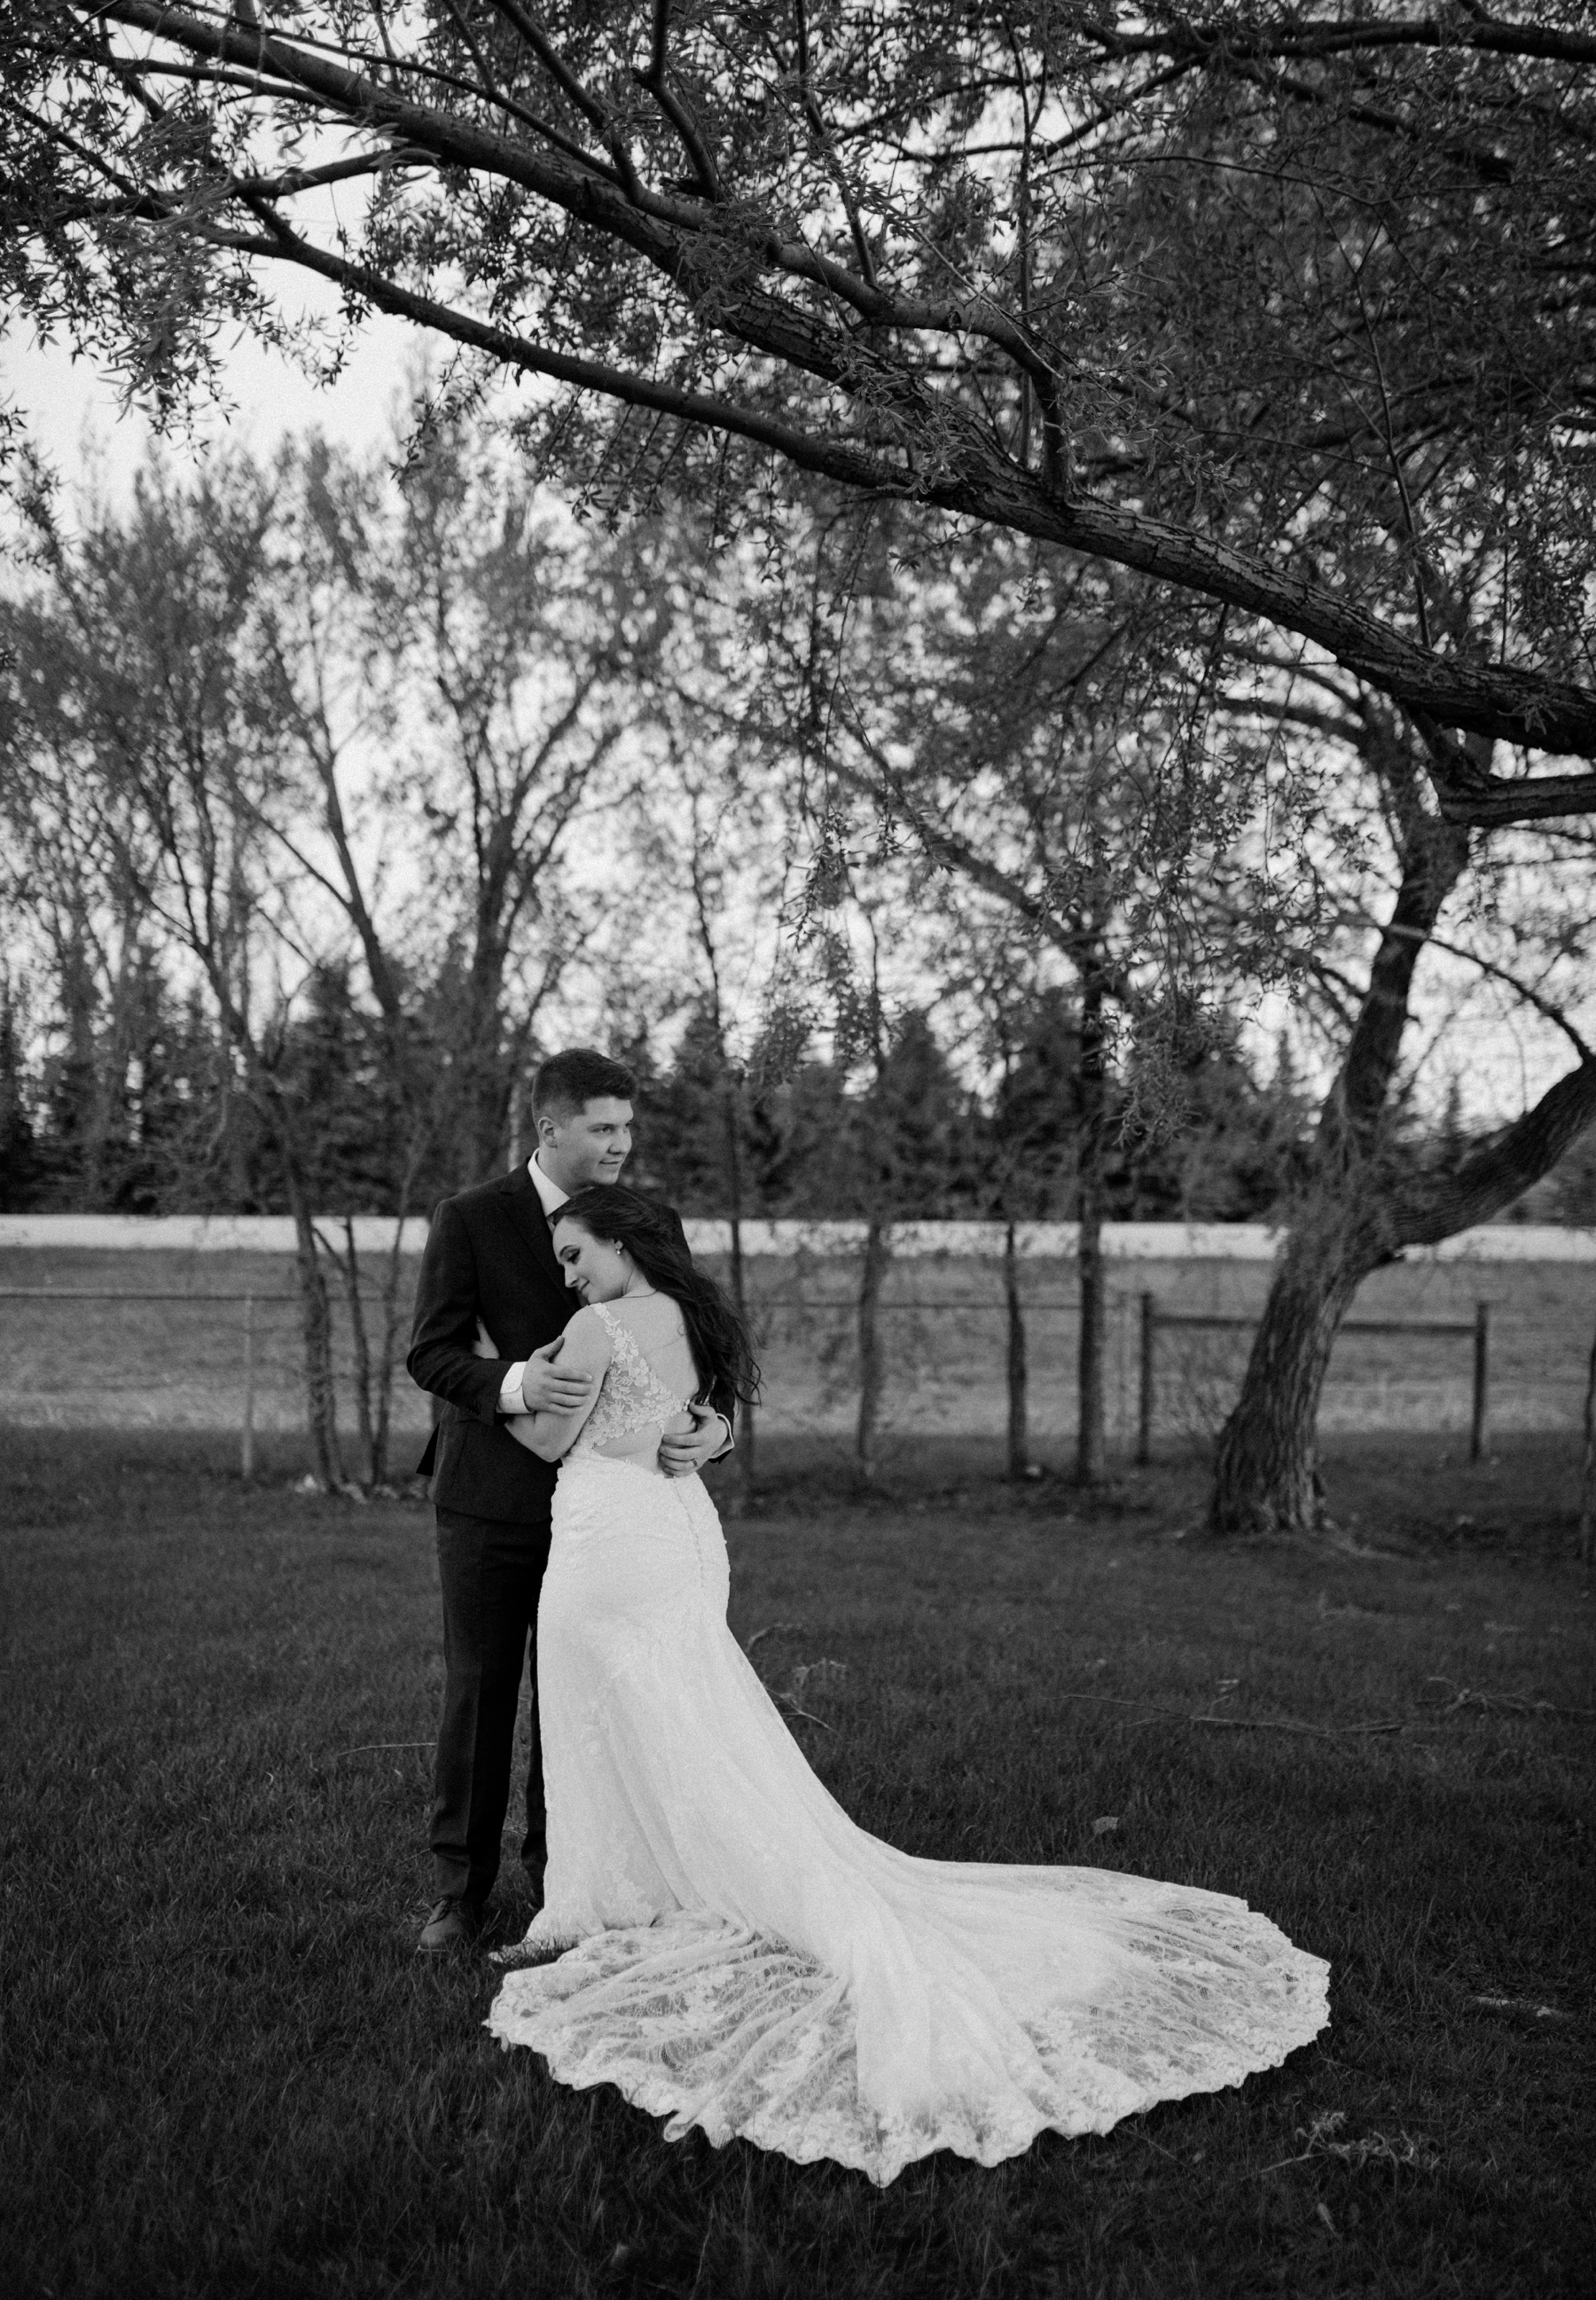 Manitoba spring wedding, prairie wedding portraits, Winnipeg wedding photographer, Manitoba weddings, Canadian elopement photography, sunset wedding portraits, lace mermaid wedding dress